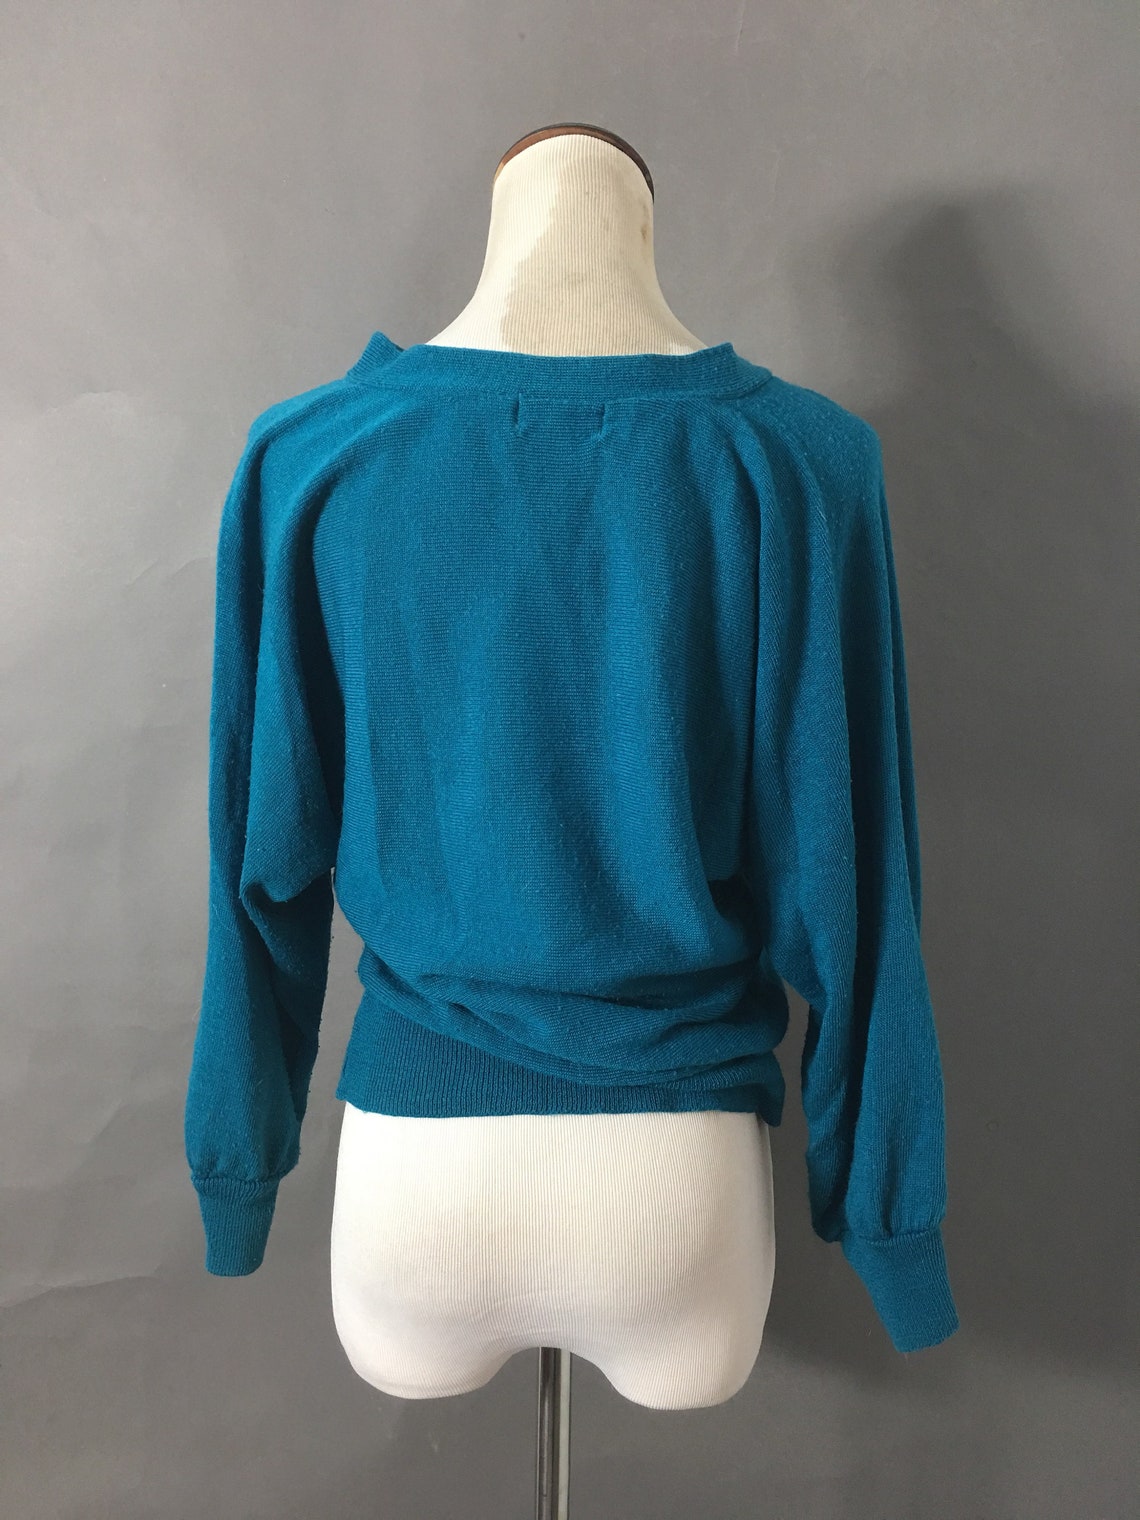 Vintage pull over sweater / vintage sweater / vintage top / | Etsy